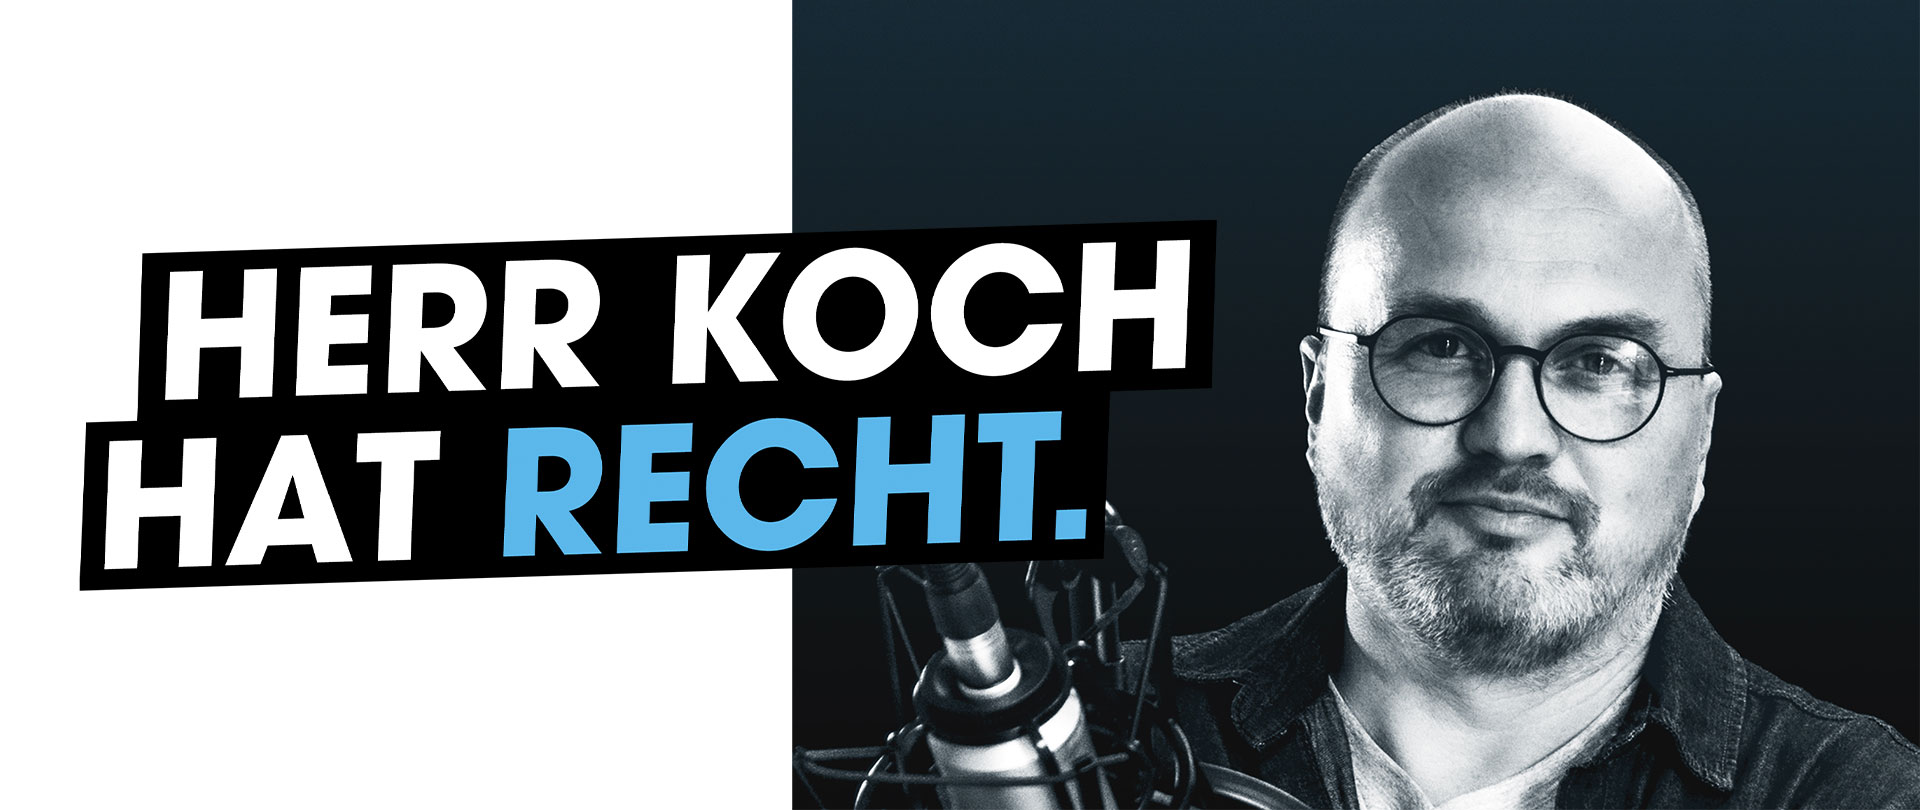 podcast-herr-koch-hat-recht-wide